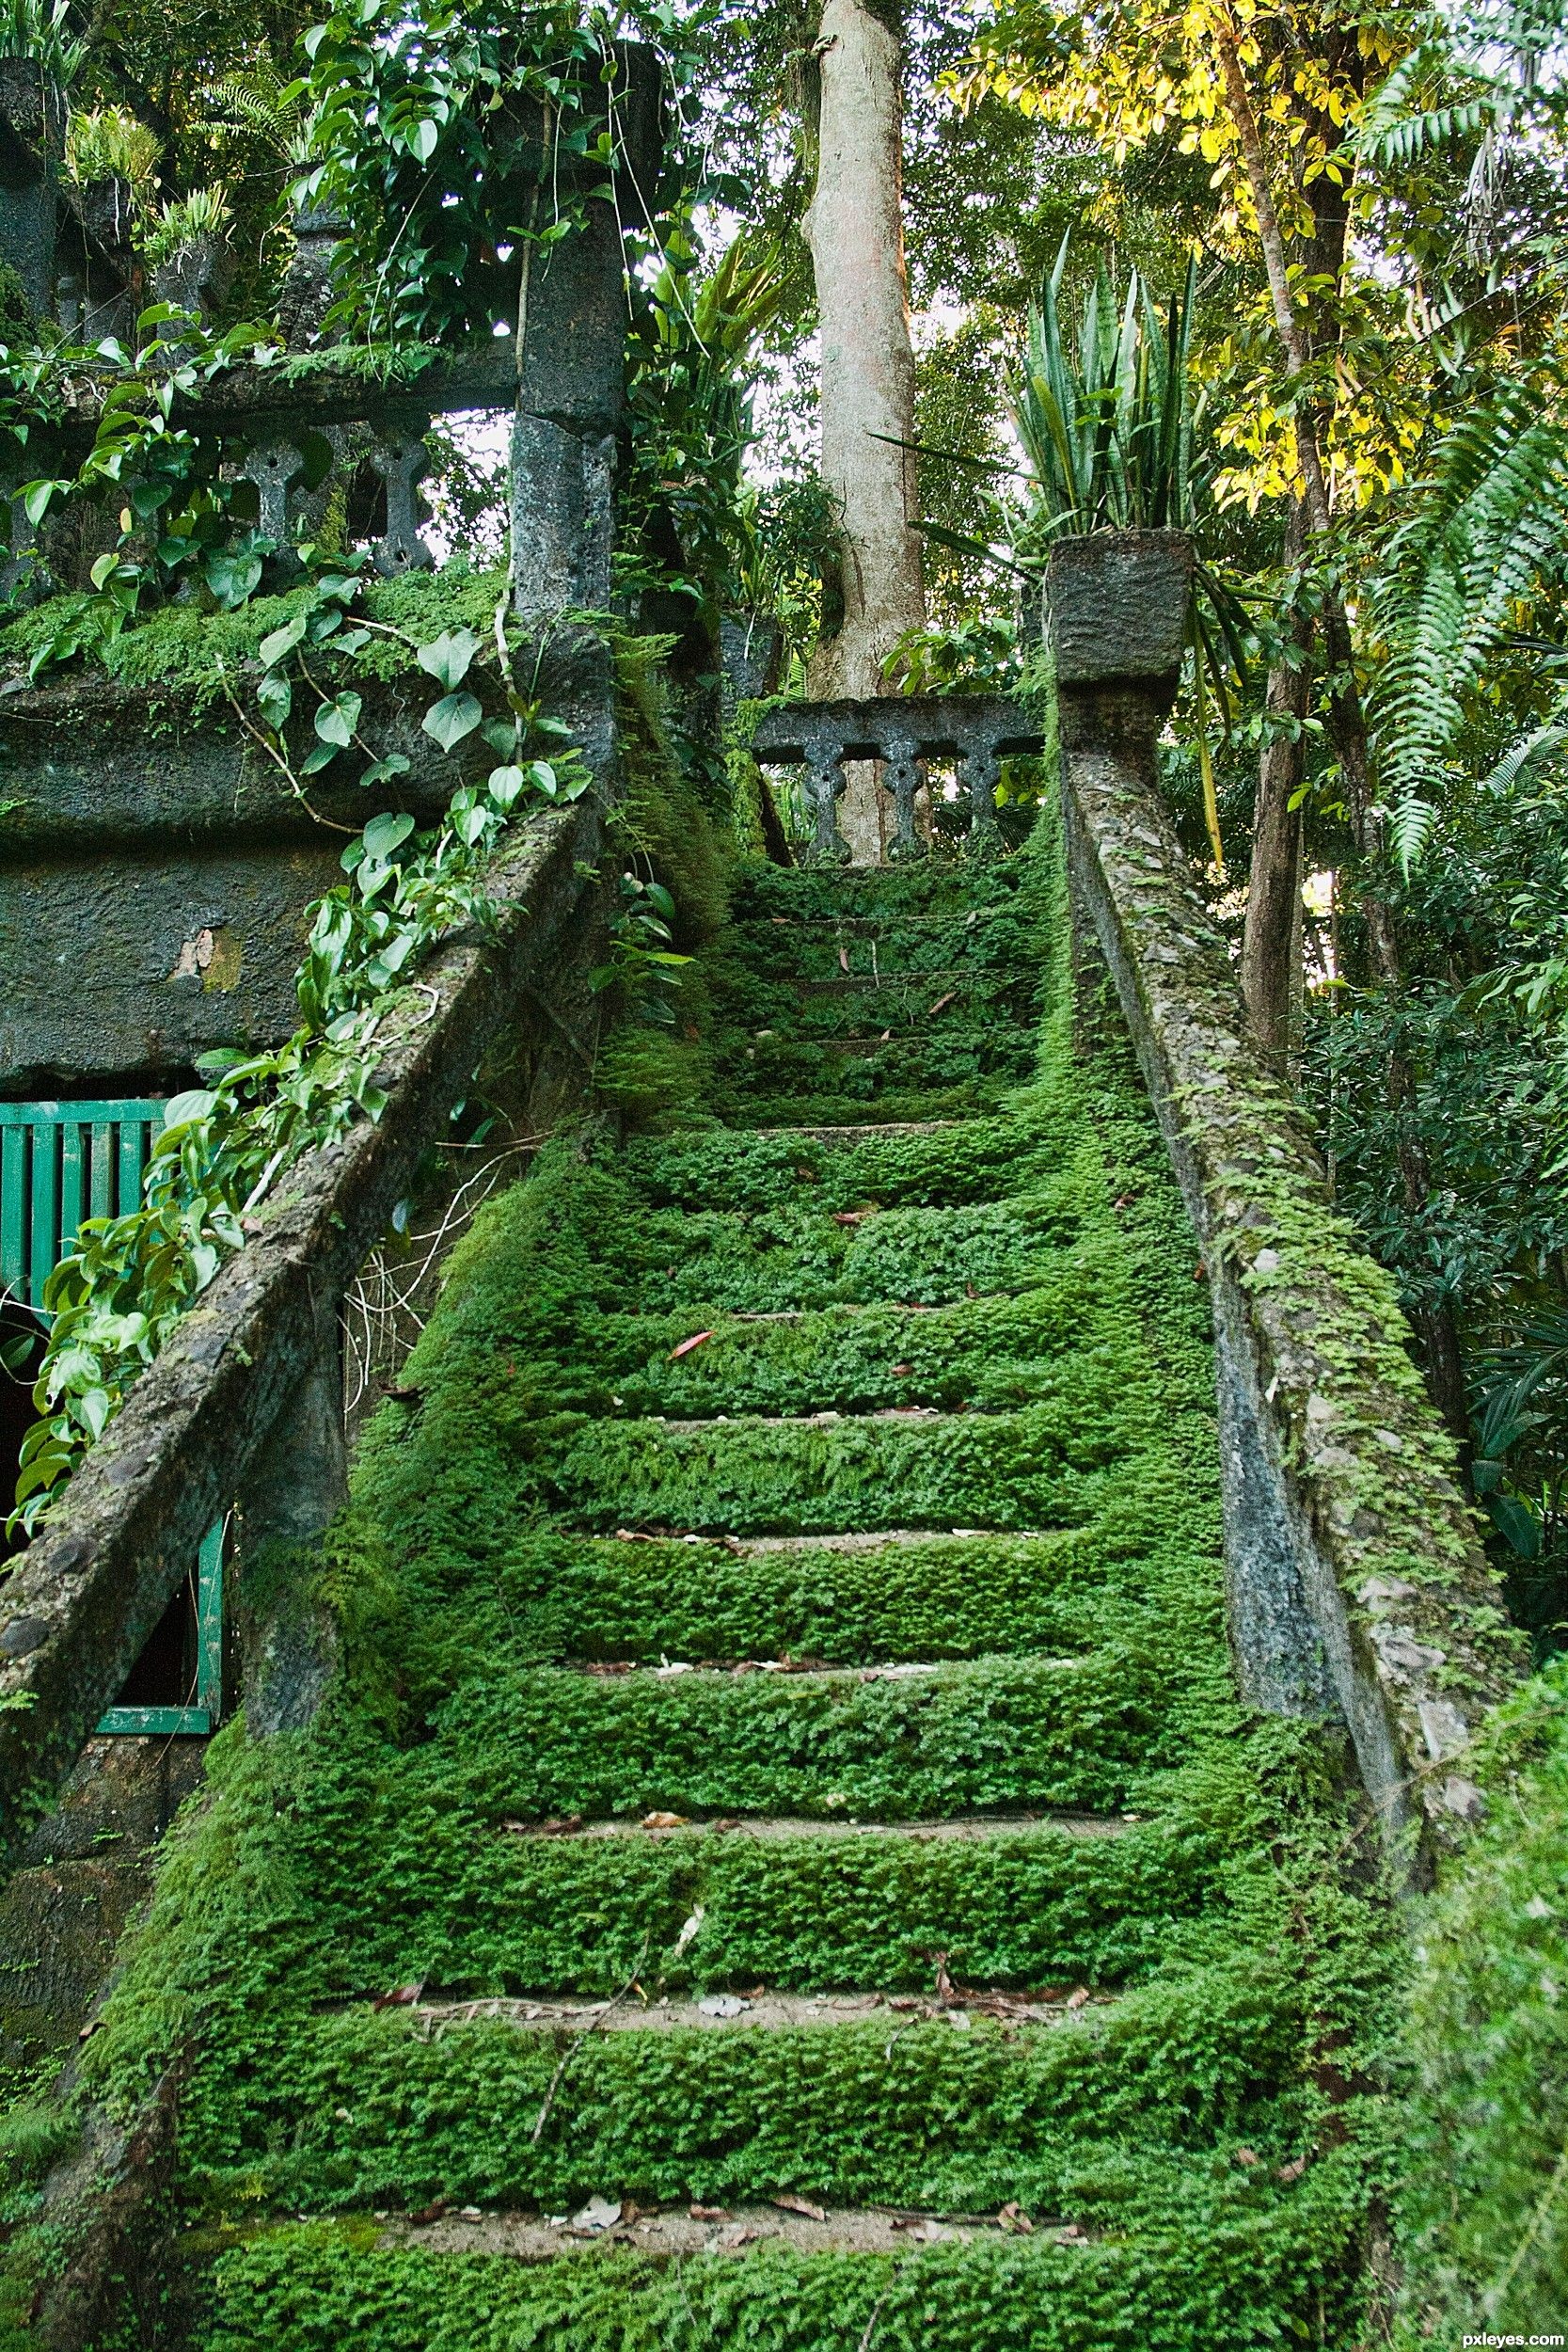 Nature's stairway | Stairways | Pinterest | Google, Gardens and ...